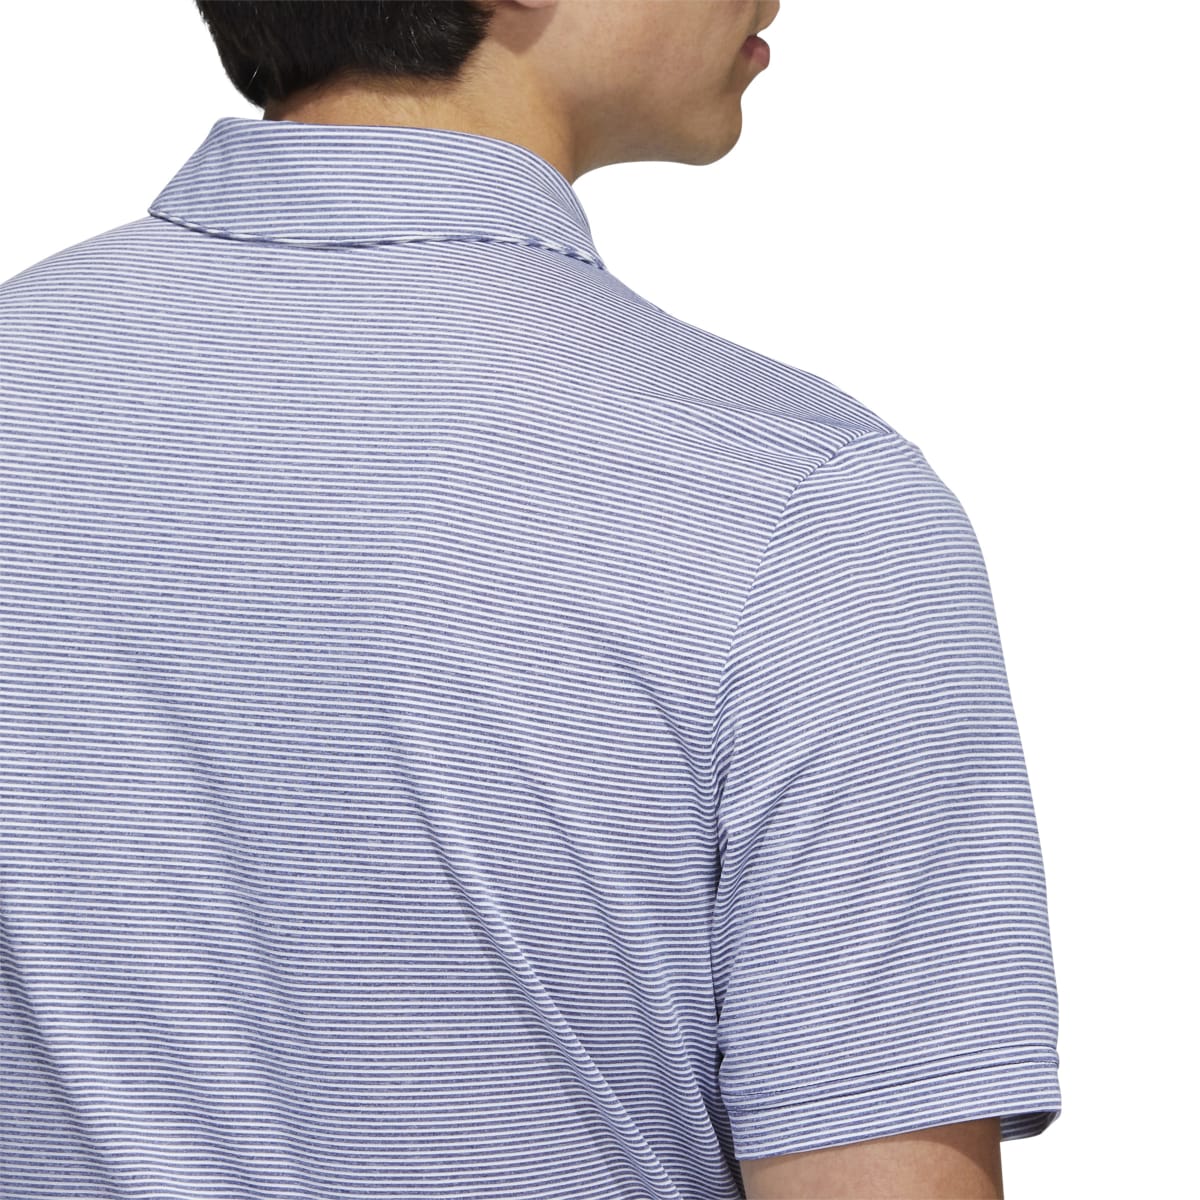 Adidas Men's Ottoman Stripe Golf Polo Shirt 2023 